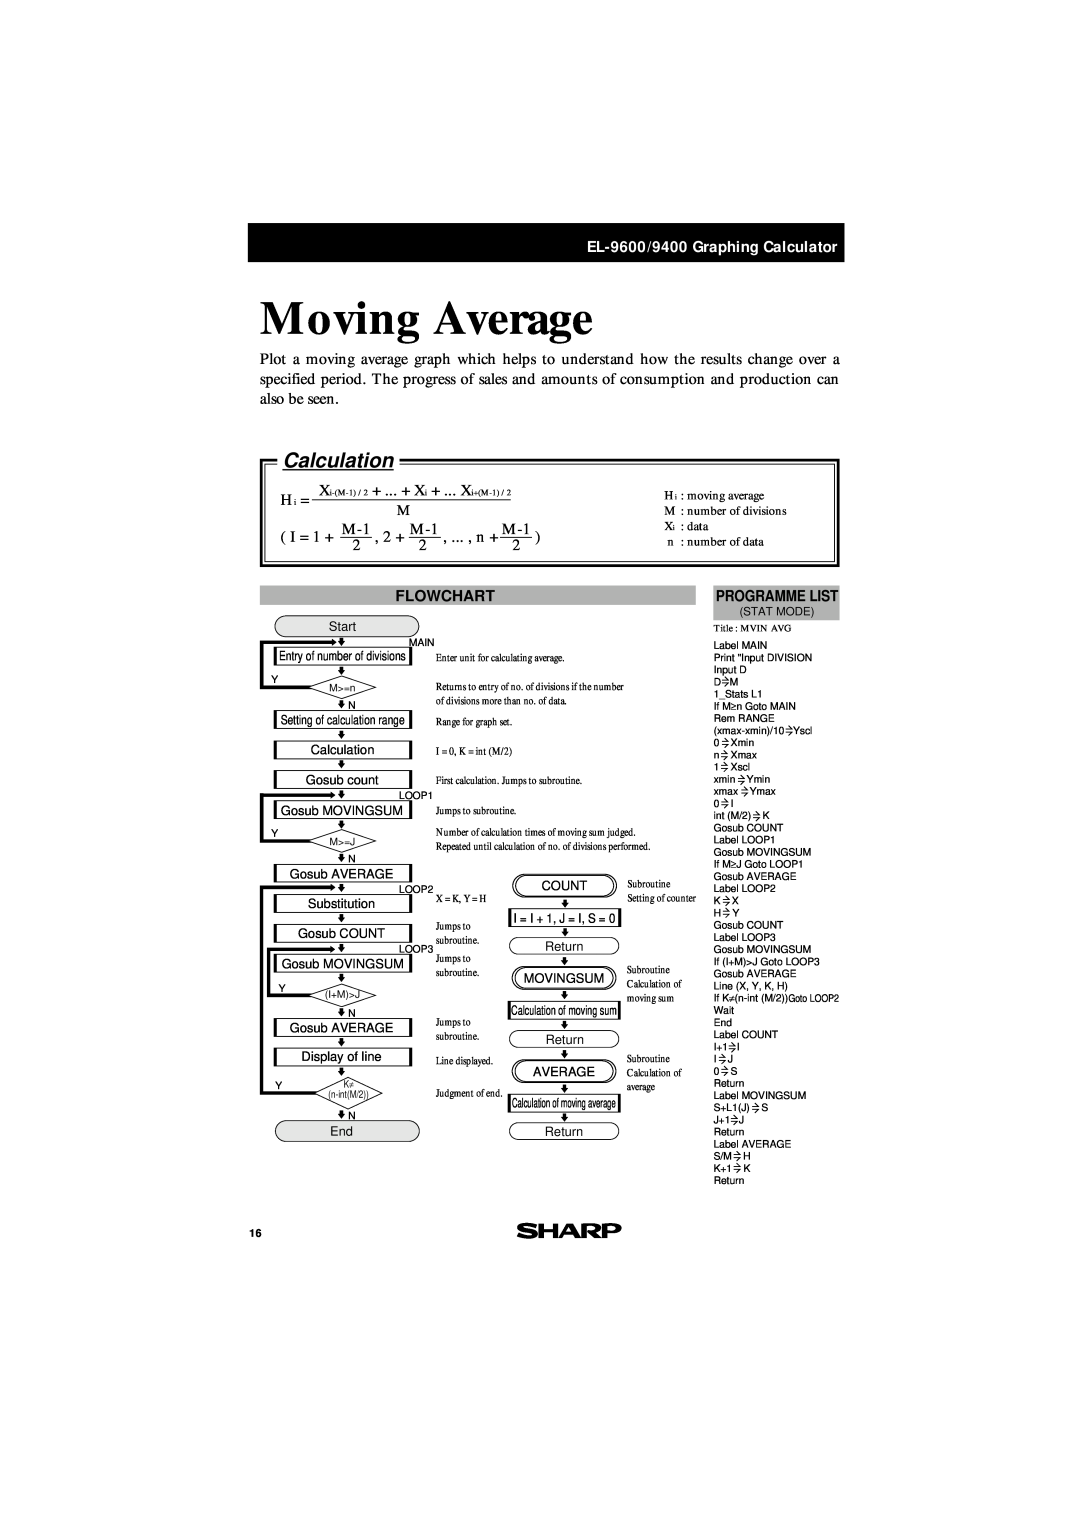 Sharp Moving Average, Hi =, I = 1 +, 2 + M-1, Calculation, EL-9600/9400 Graphing Calculator, Flowchart, Programme List 